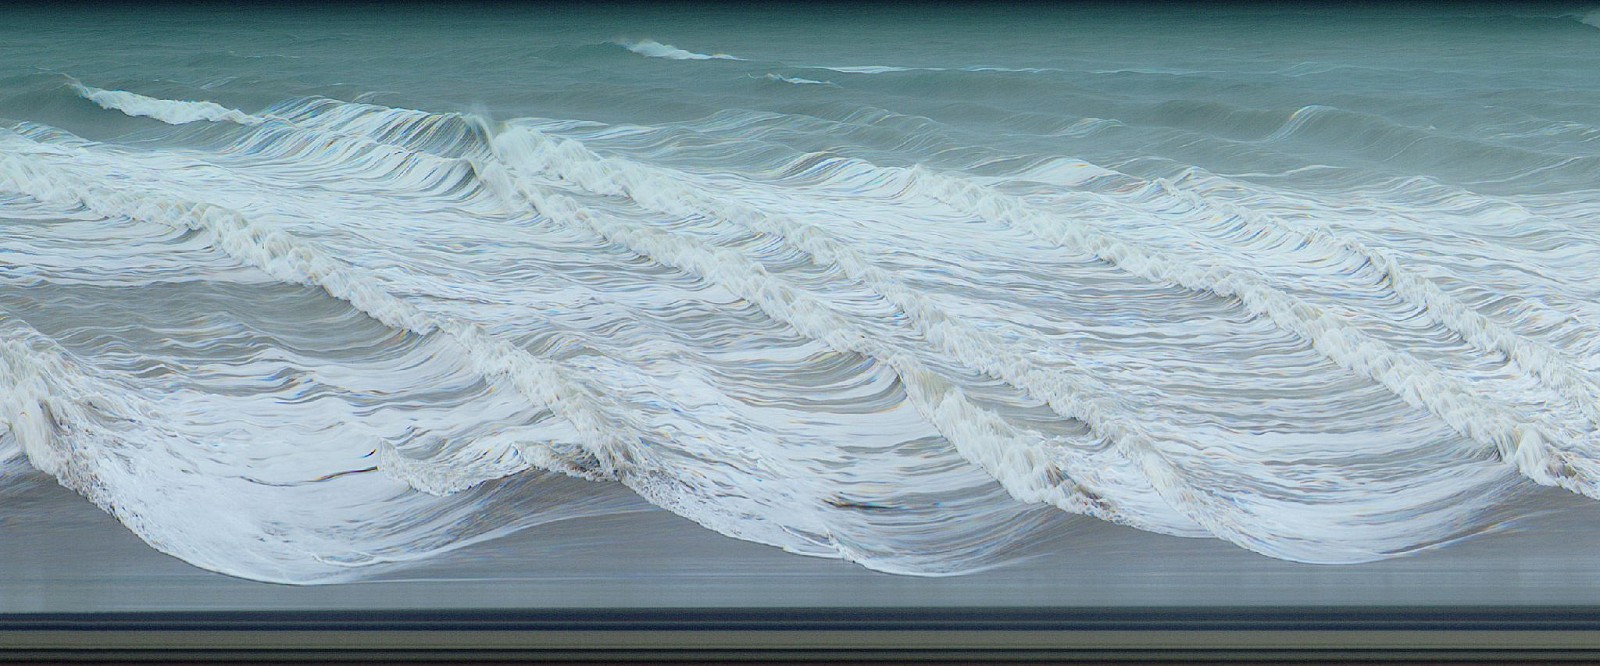 Jay Mark Johnson, STORM AT SEA #11, 2010 Malibu - Ventura CA
archival pigment on paper, mounted on aluminum, 40 x 96 in. (101.6 x 243.8 cm)